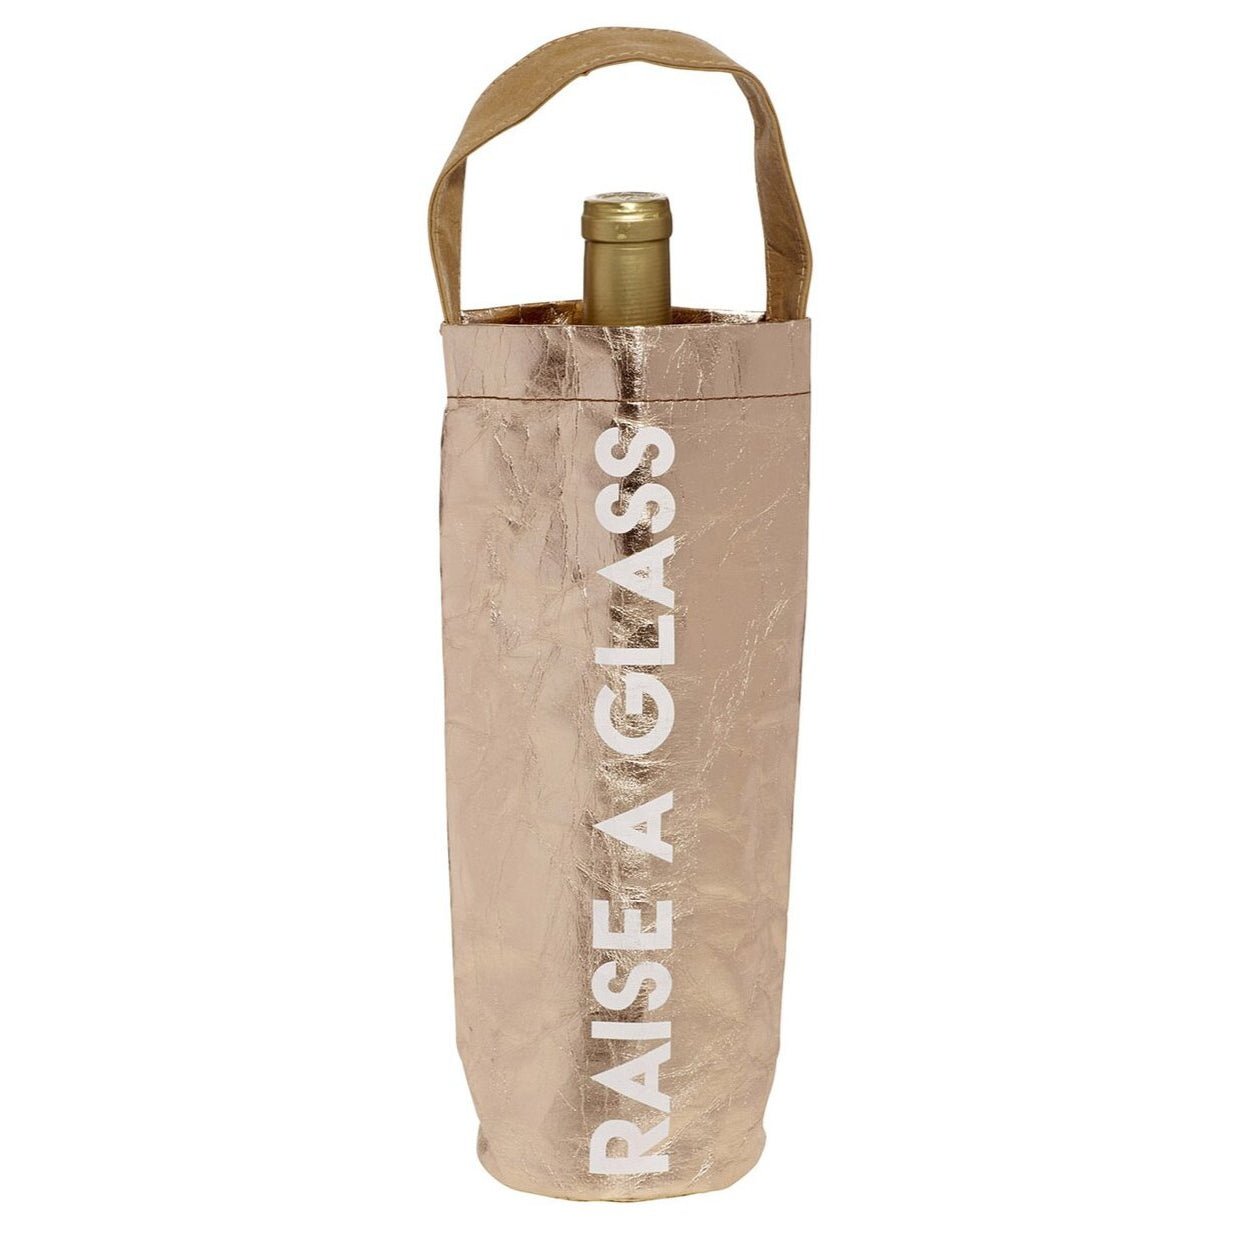 Raise a Glass Rose Gold Wine Bottle Bag | Holds Standard Wine Bottle for Gifting